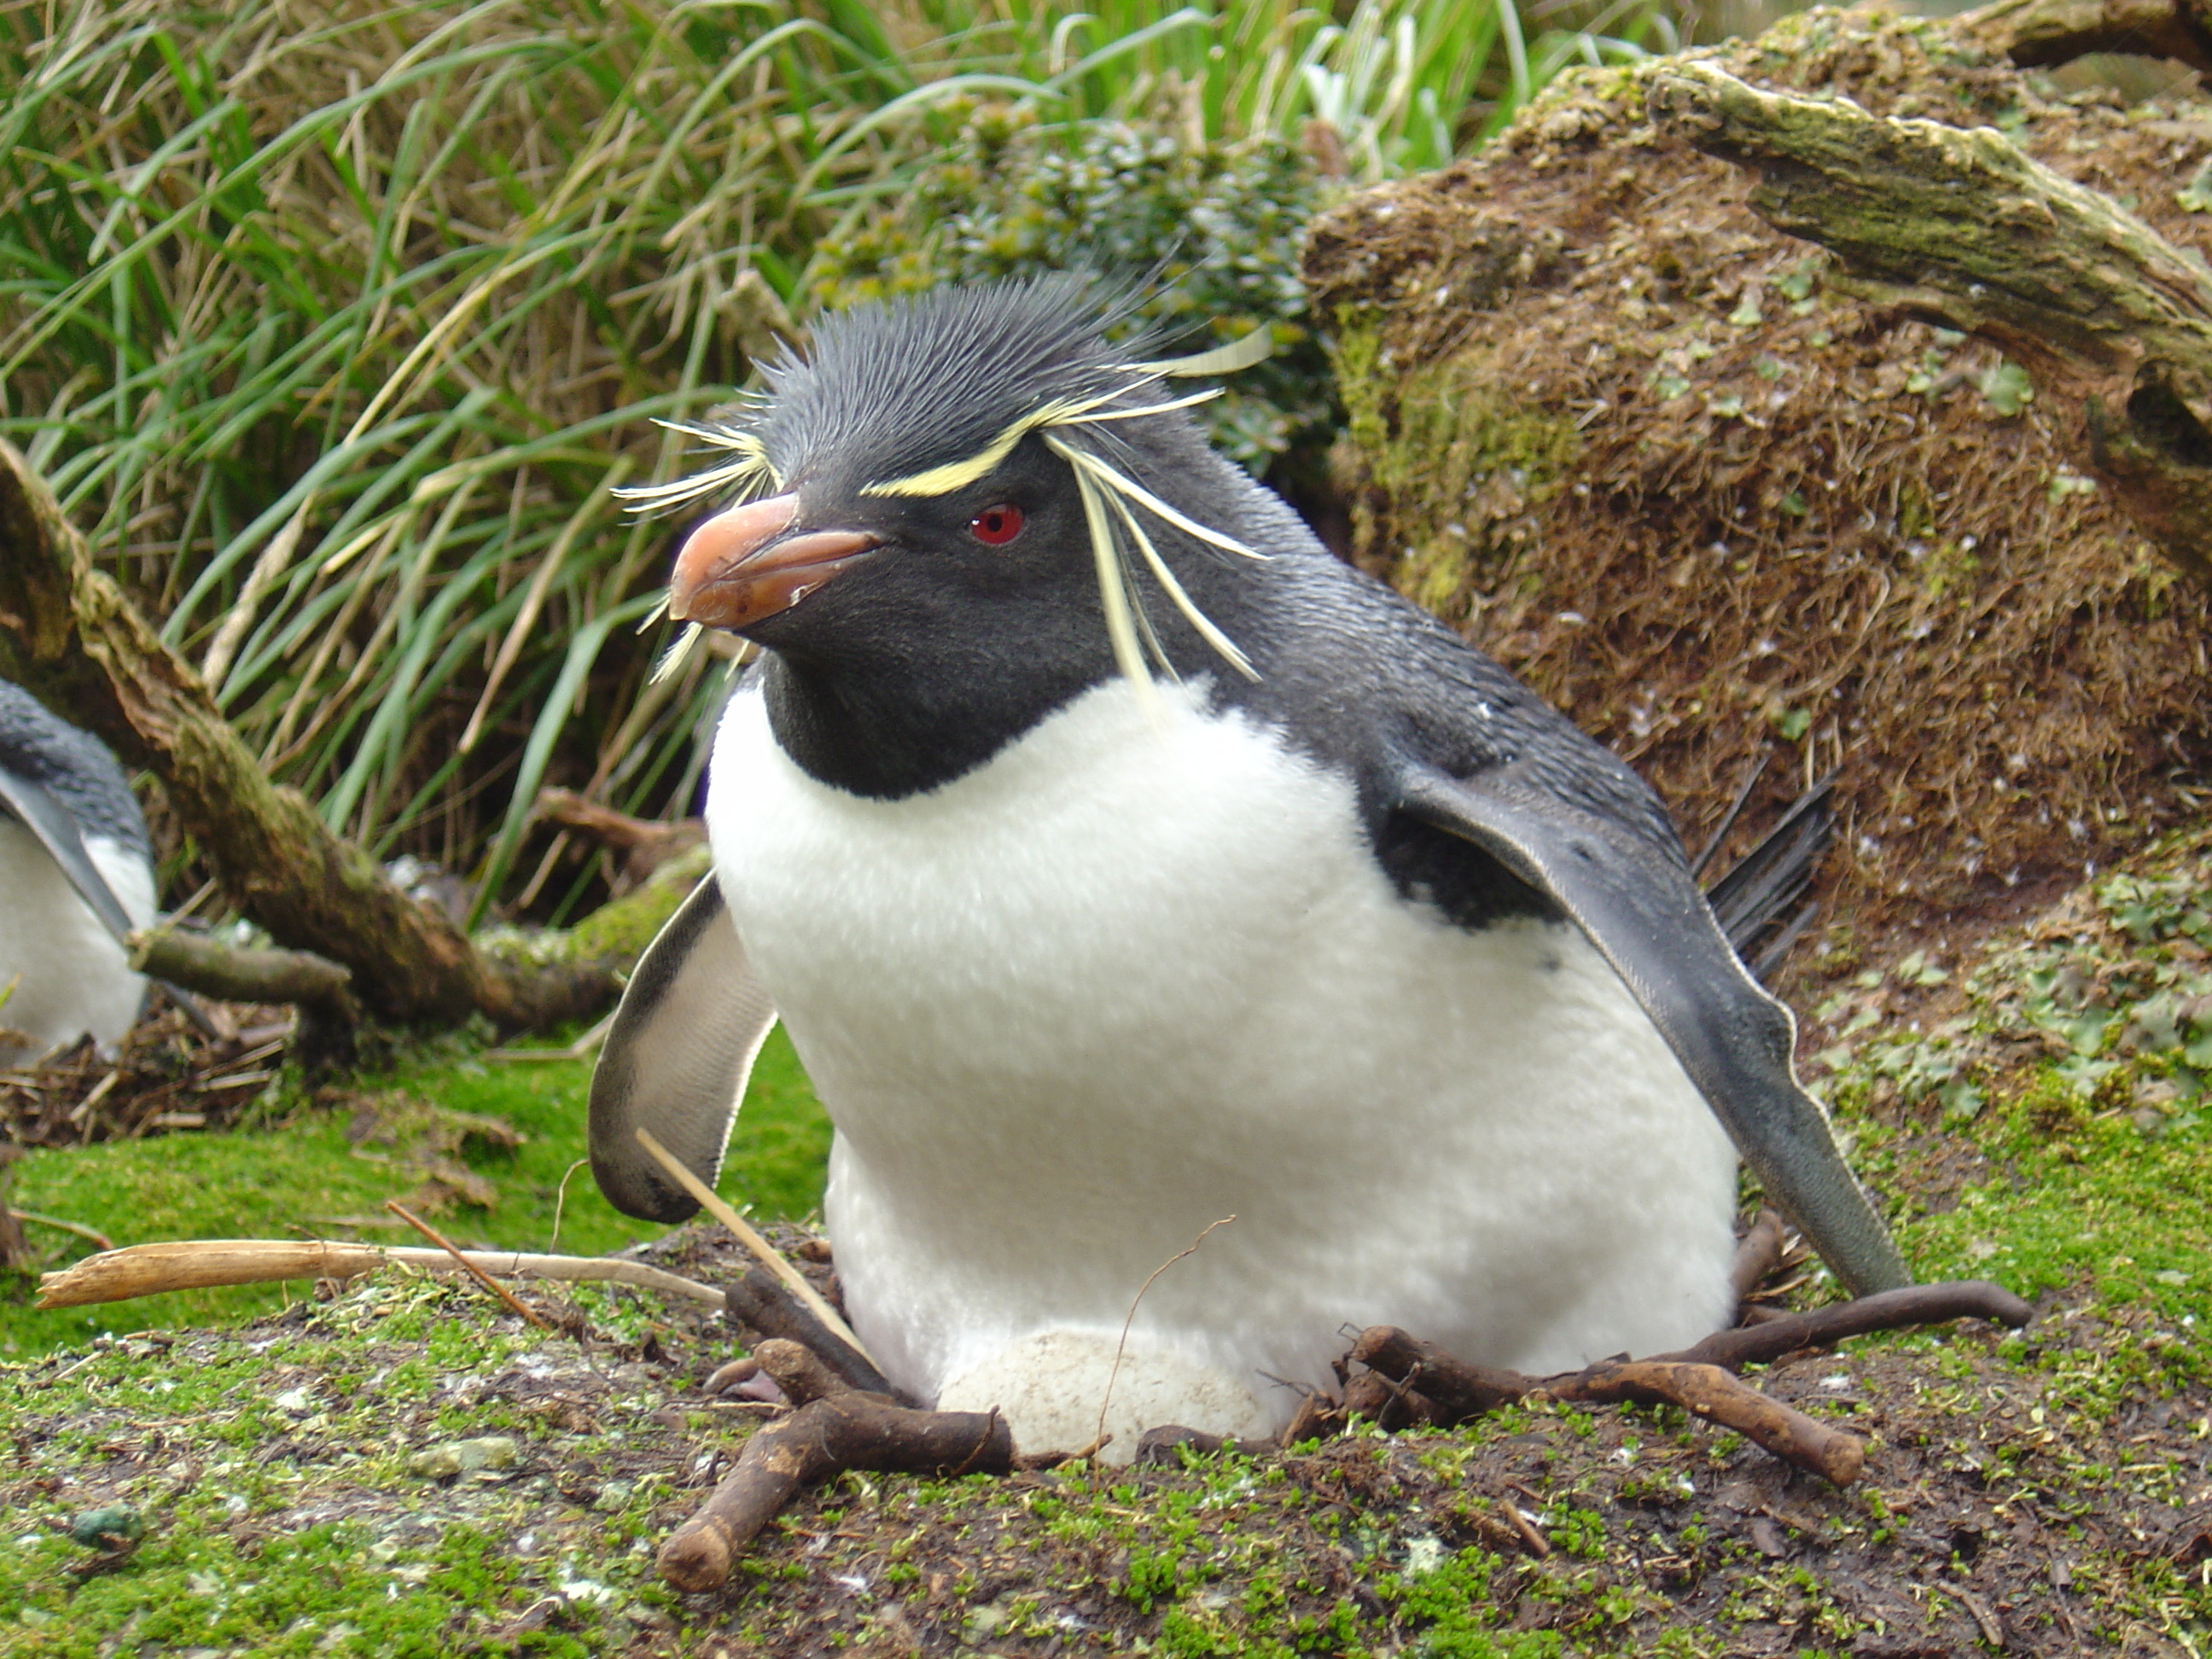 Rockhopper Penguins are Losing Ground